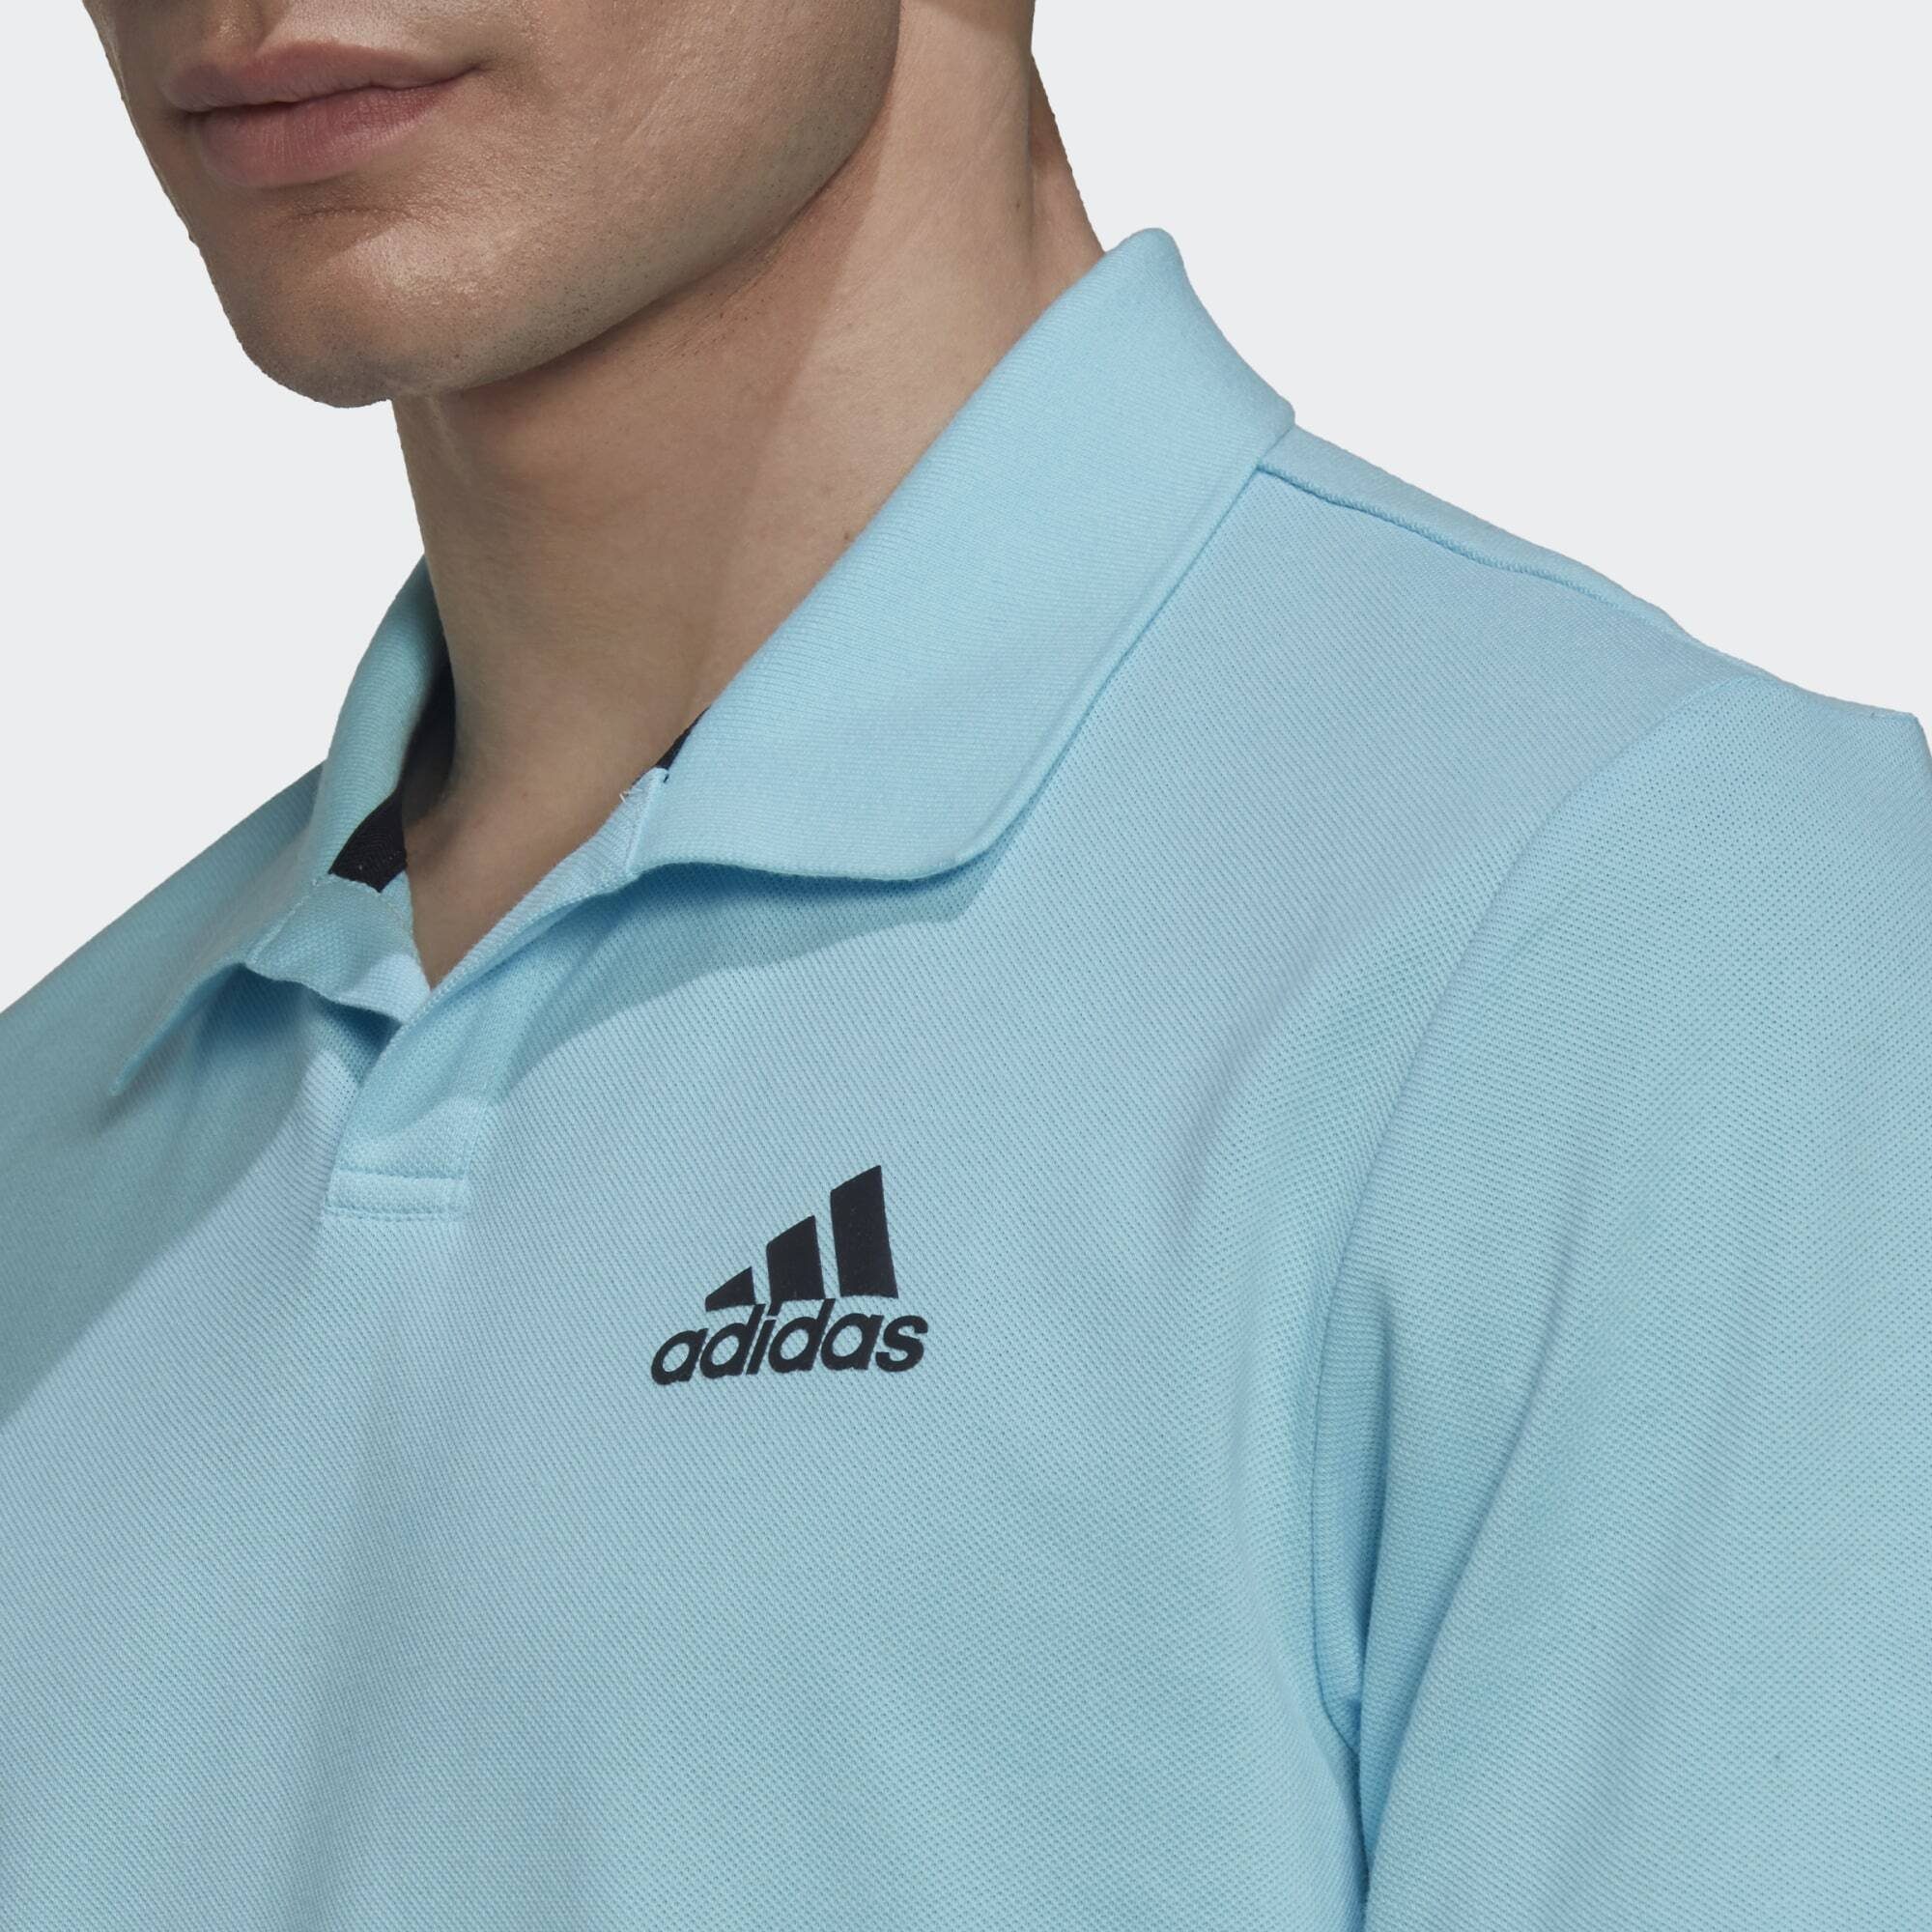 adidas Performance Poloshirt Blue POLOSHIRT CLUBHOUSE TENNIS Bliss 3-BAR